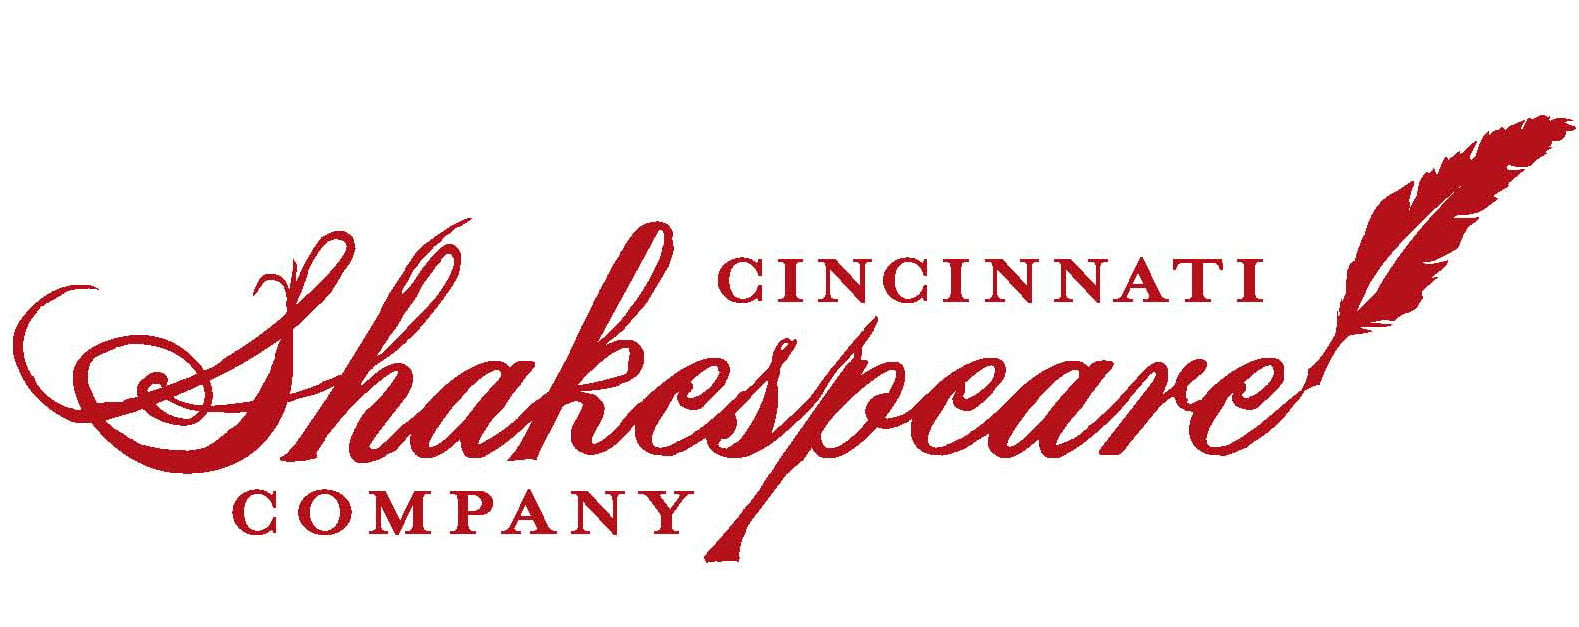 Cincy Shakes logo